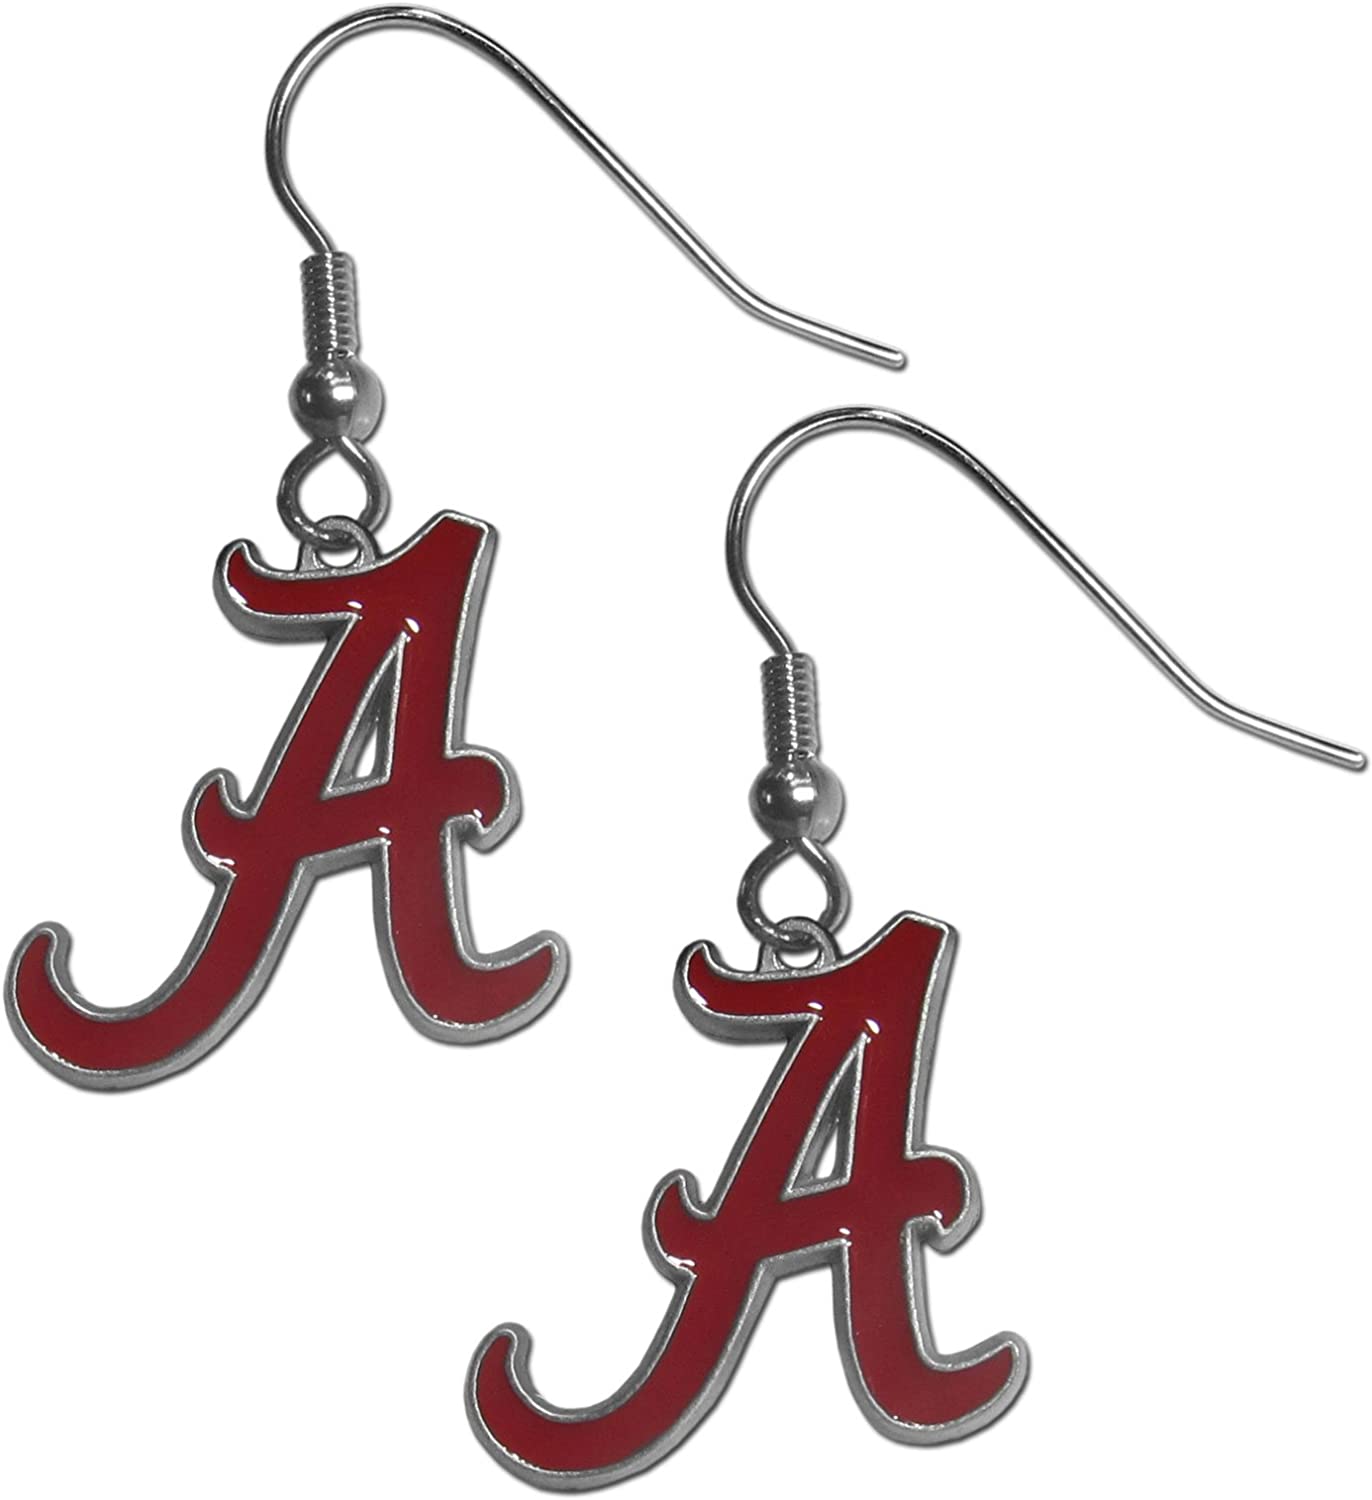 Siskiyou NCAA womens Dangle Earrings Alabama Crimson Tide One Size Team Color - image 1 of 2